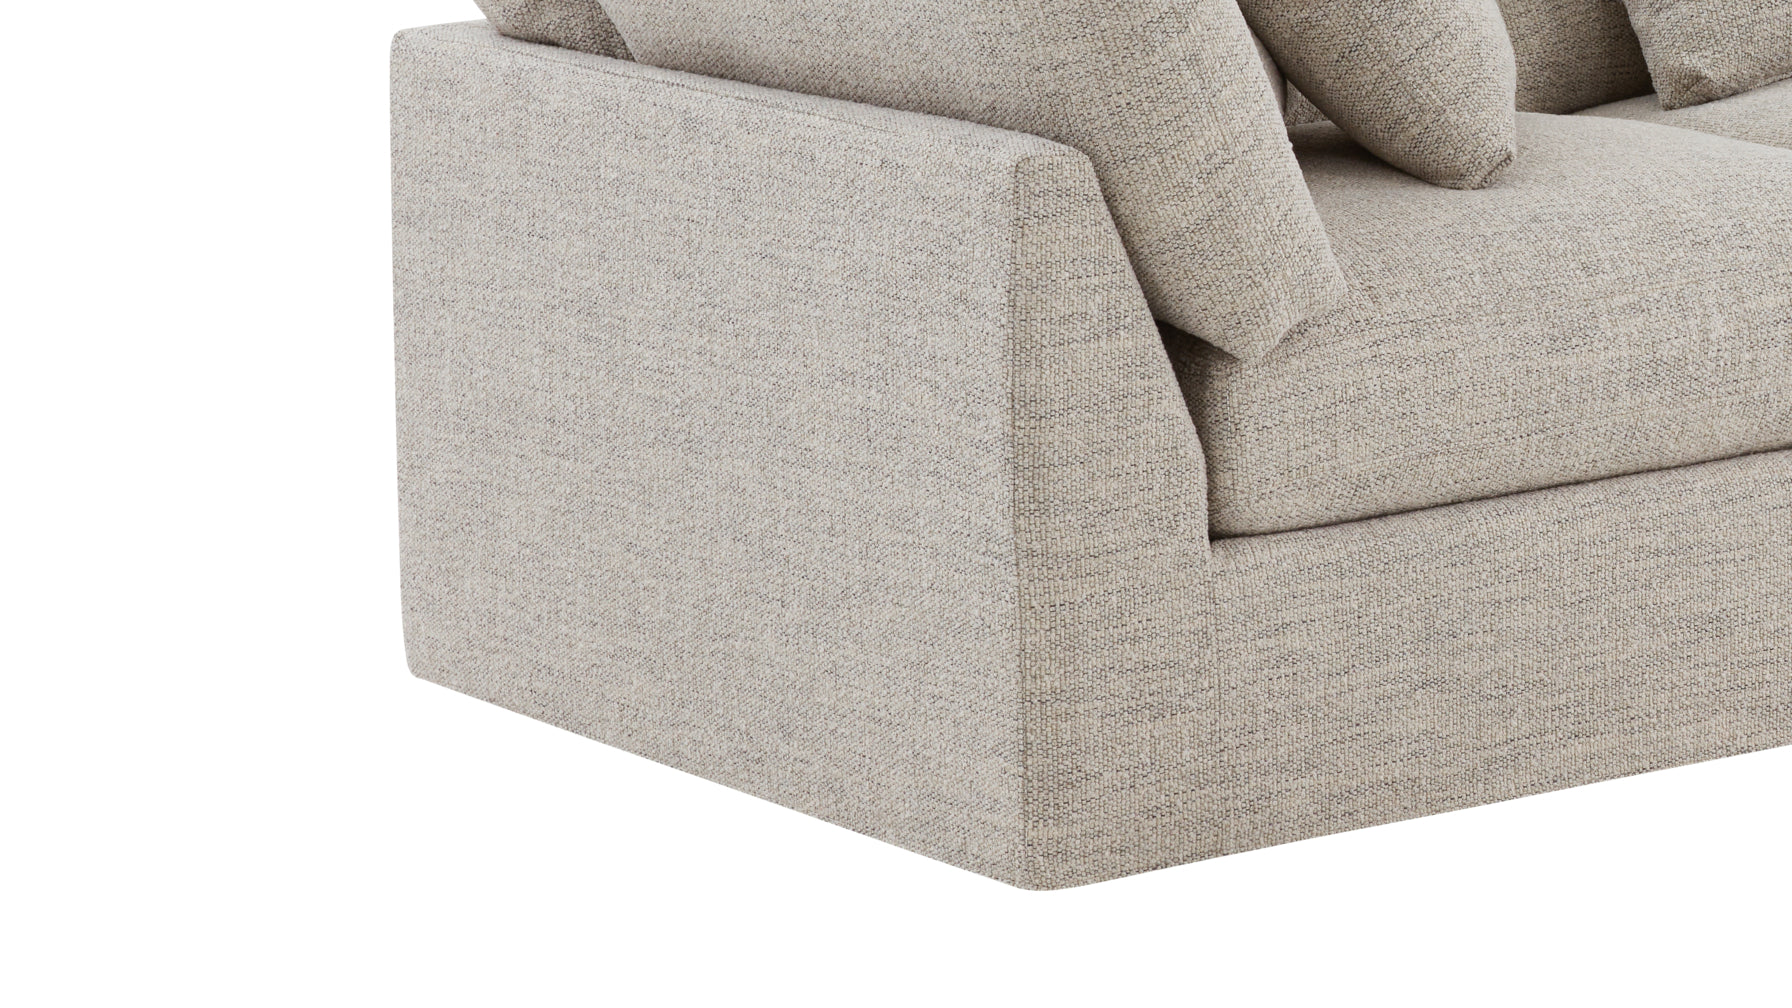 Get Together™ 3-Piece Modular Sofa, Large, Oatmeal - Image 11